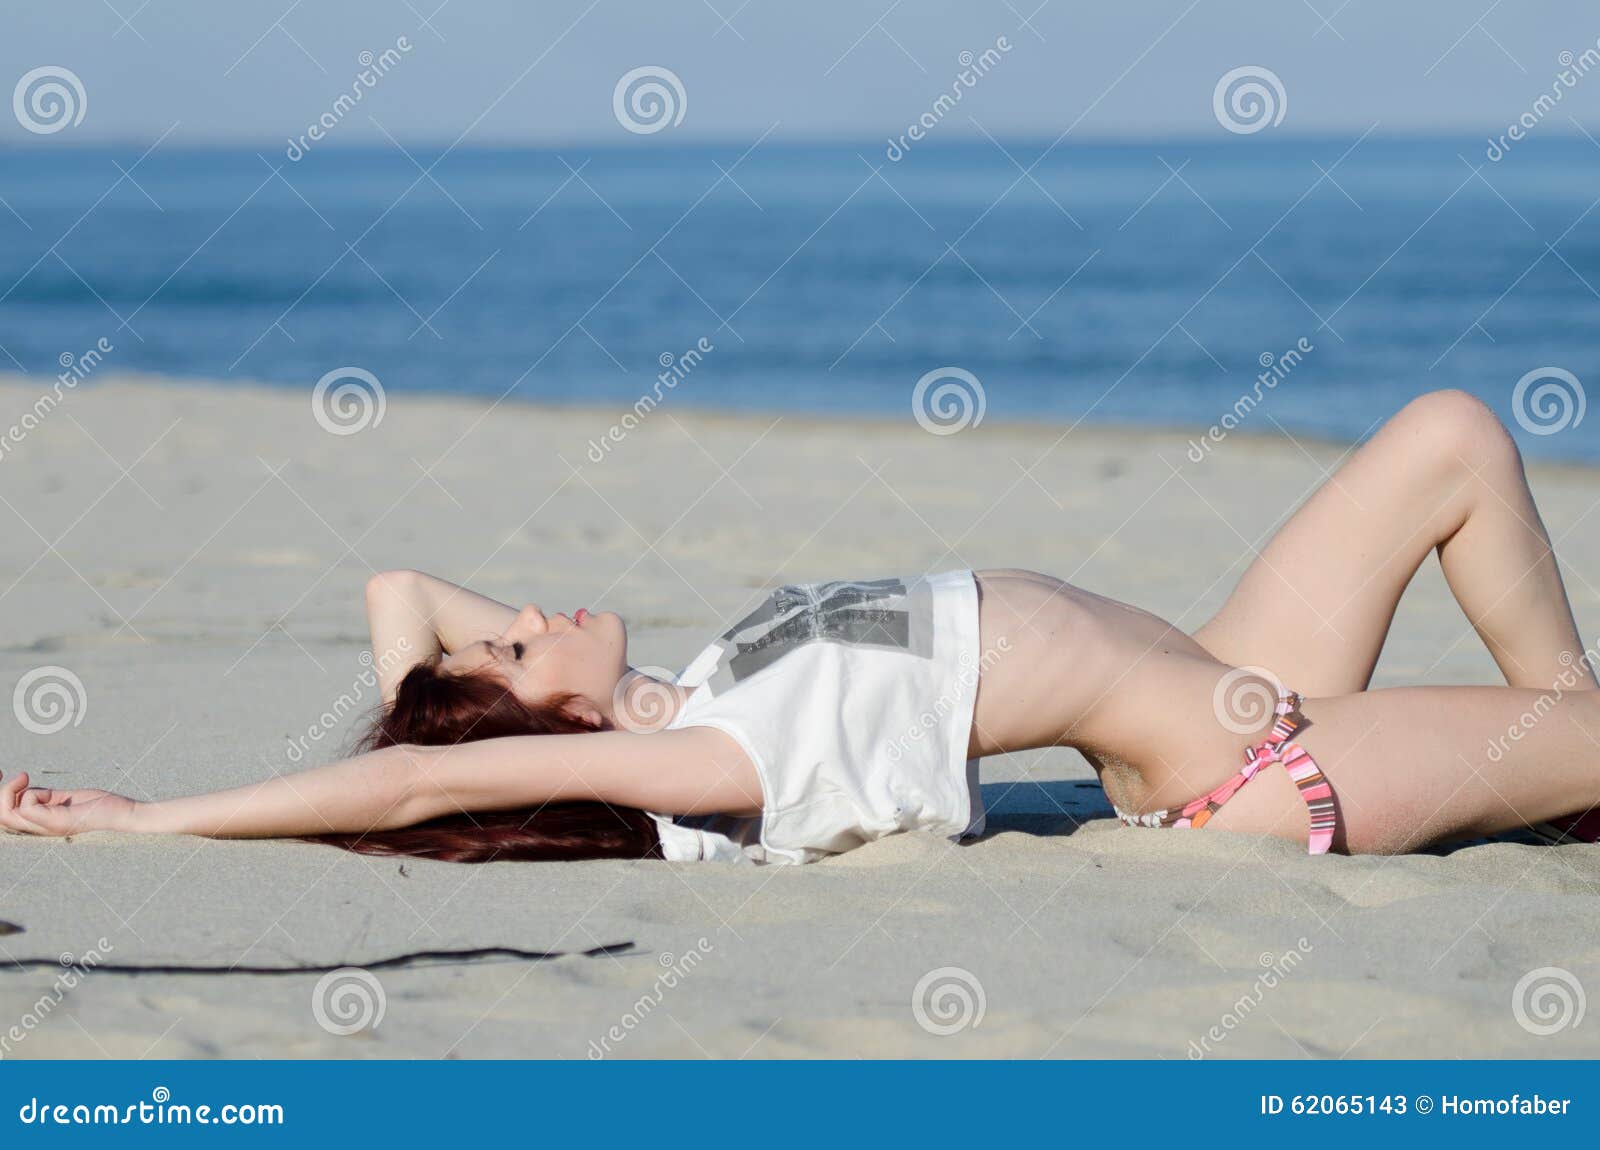 1,656 Young Woman Bikini Bottom Stock Photos - Free & Royalty-Free Stock  Photos from Dreamstime